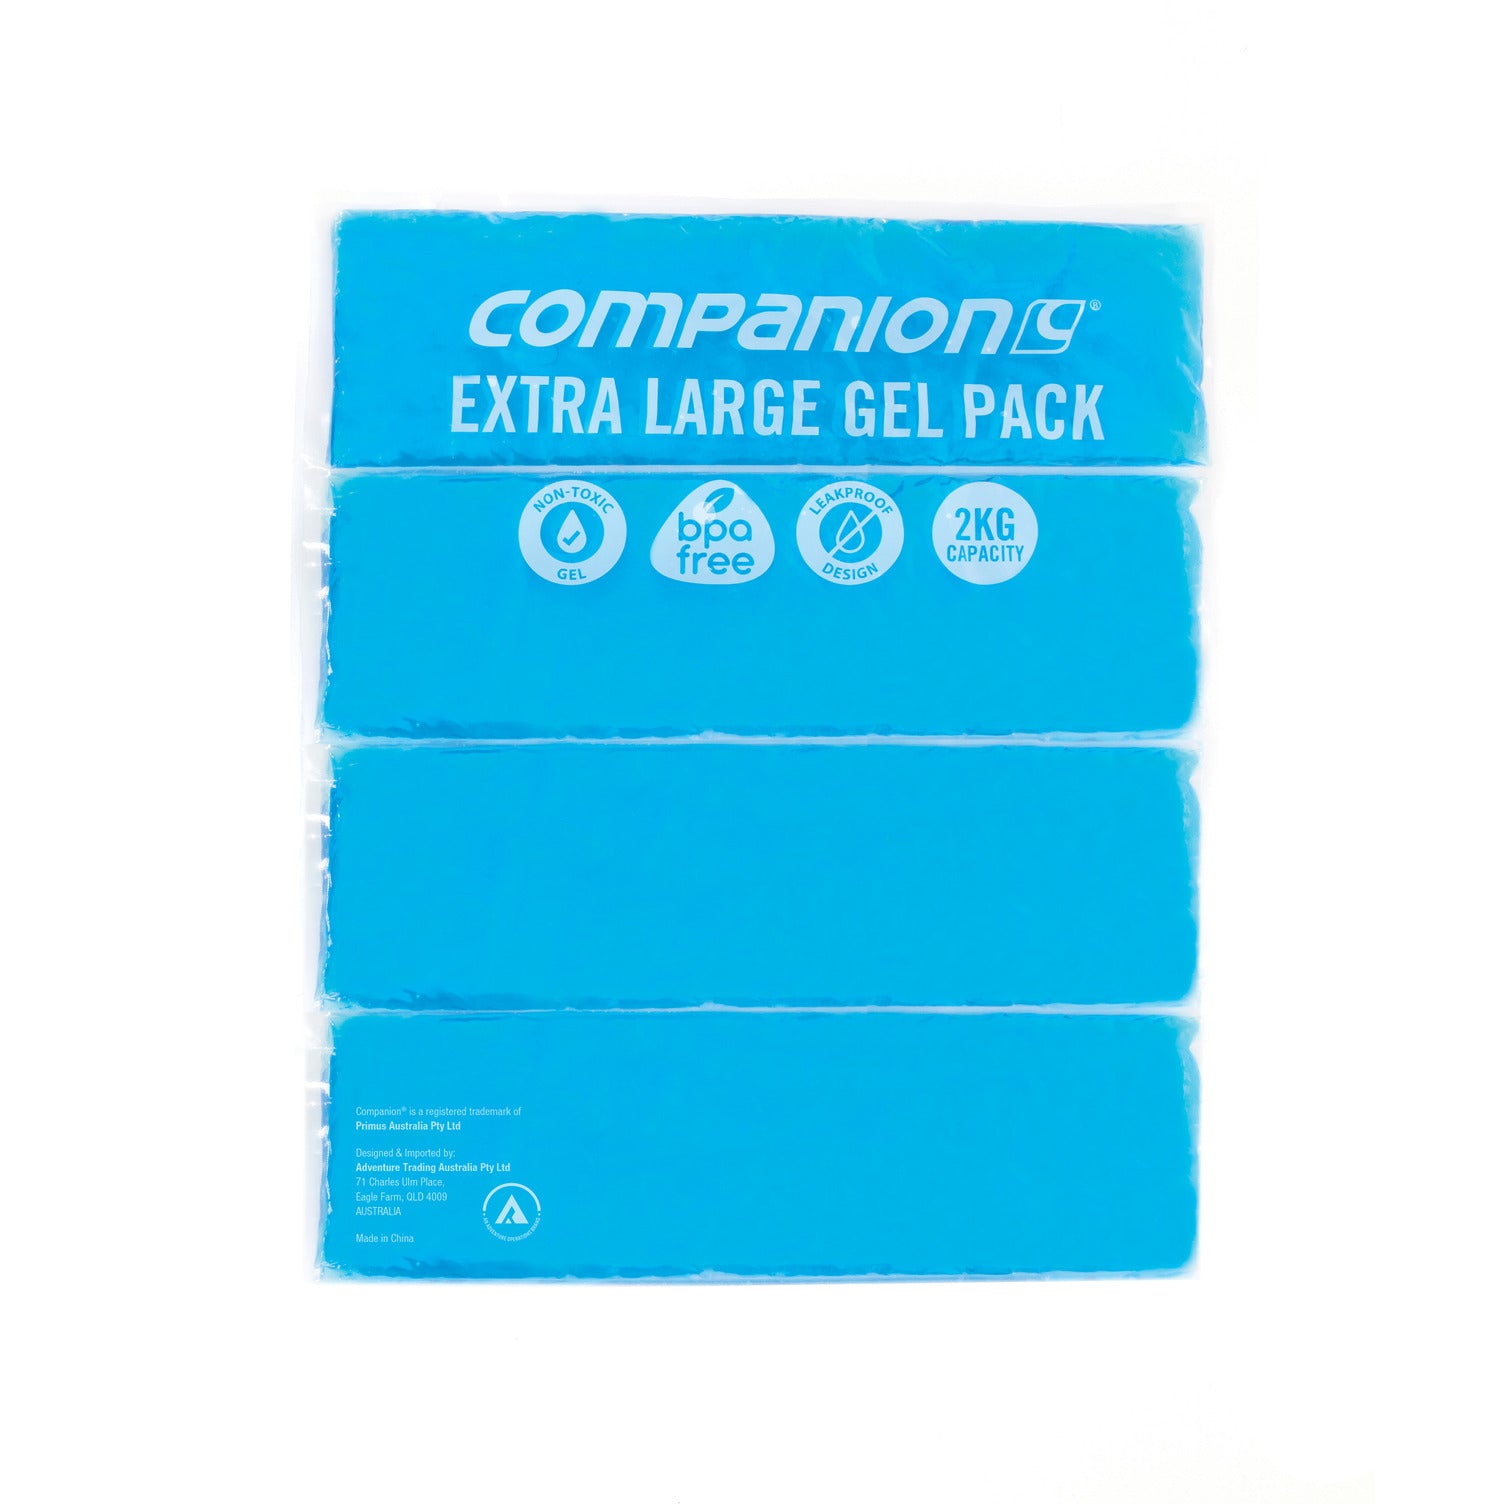 Companion Gel Pack